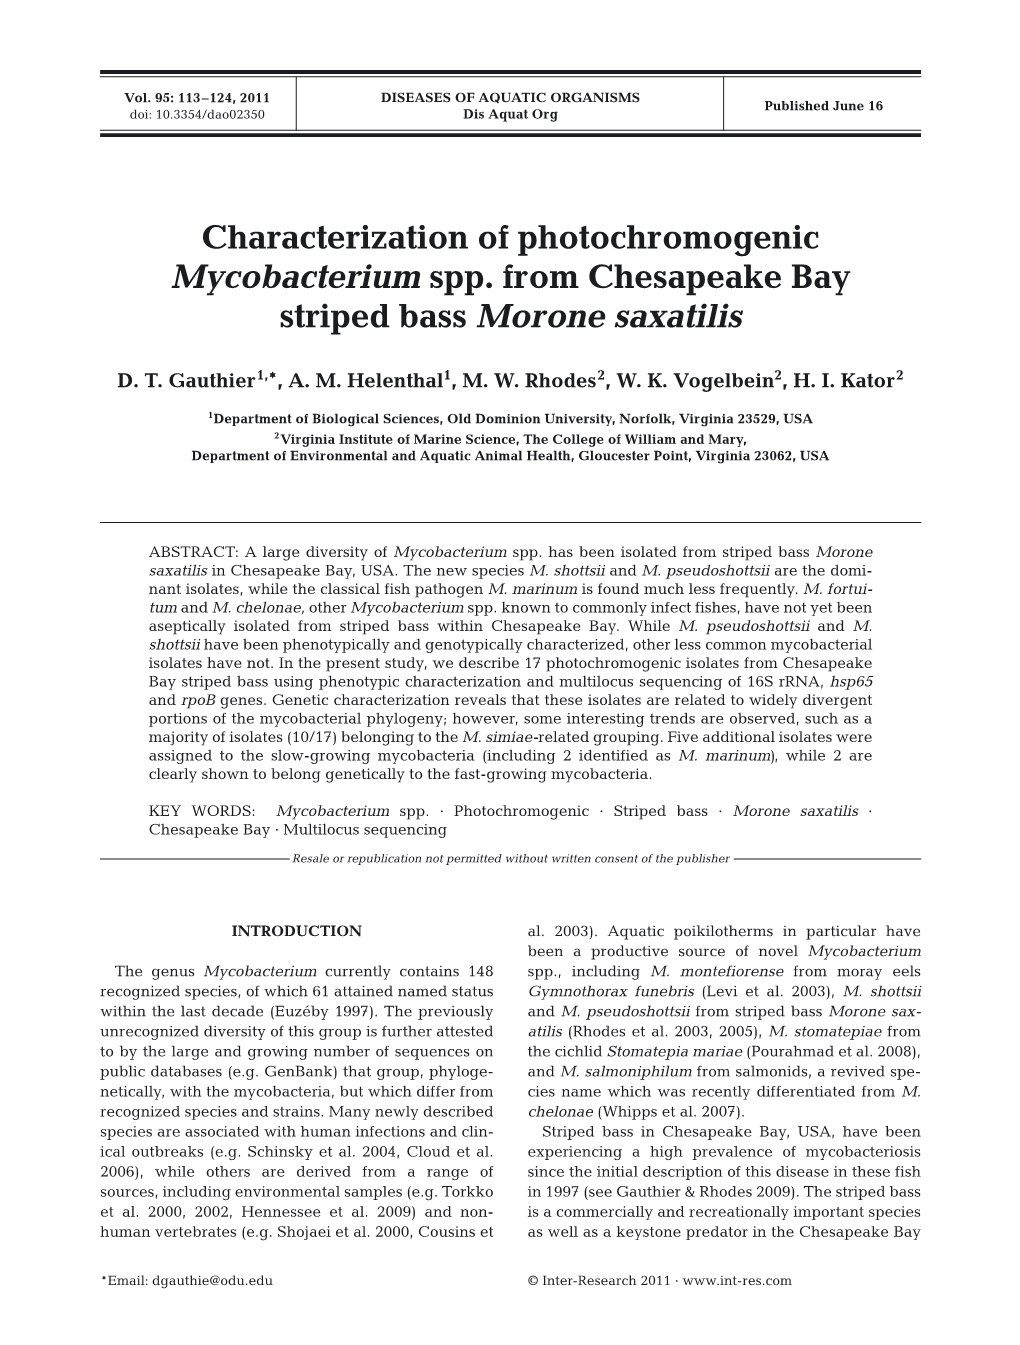 Characterization of Photochromogenic Mycobacterium Spp. from Chesapeake Bay Striped Bass Morone Saxatilis